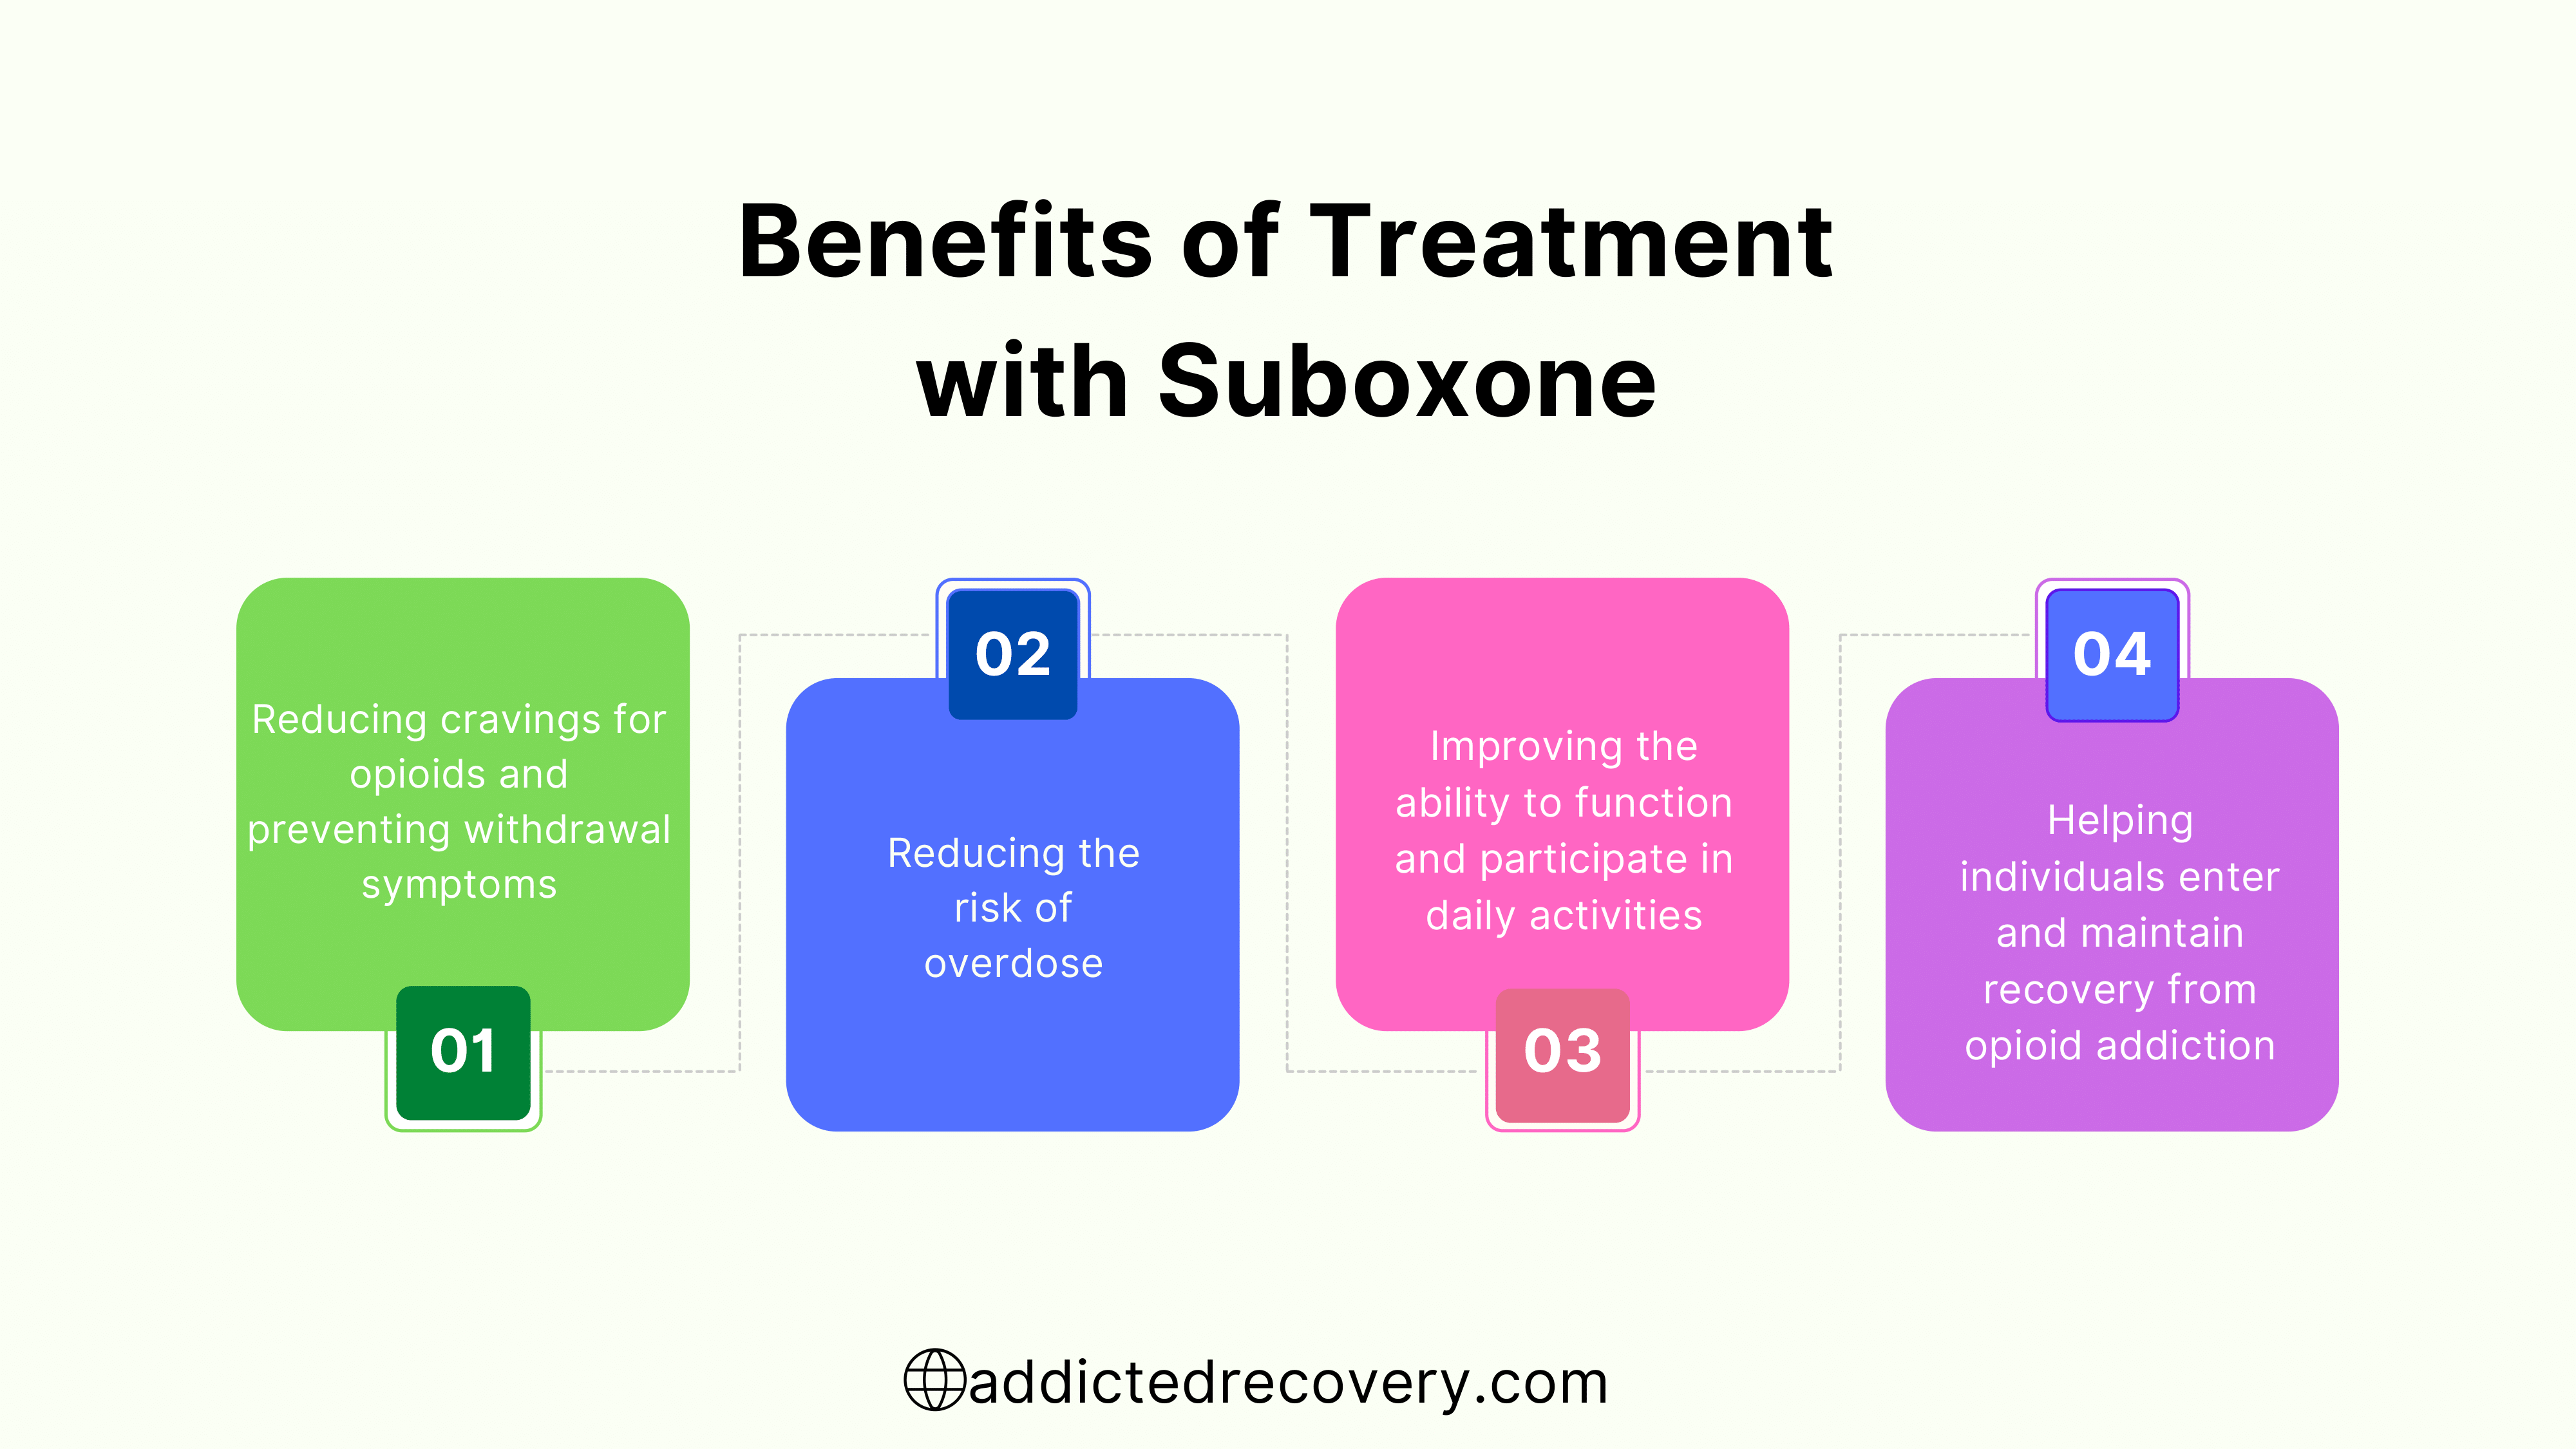 Benefits of Treatment with Suboxone